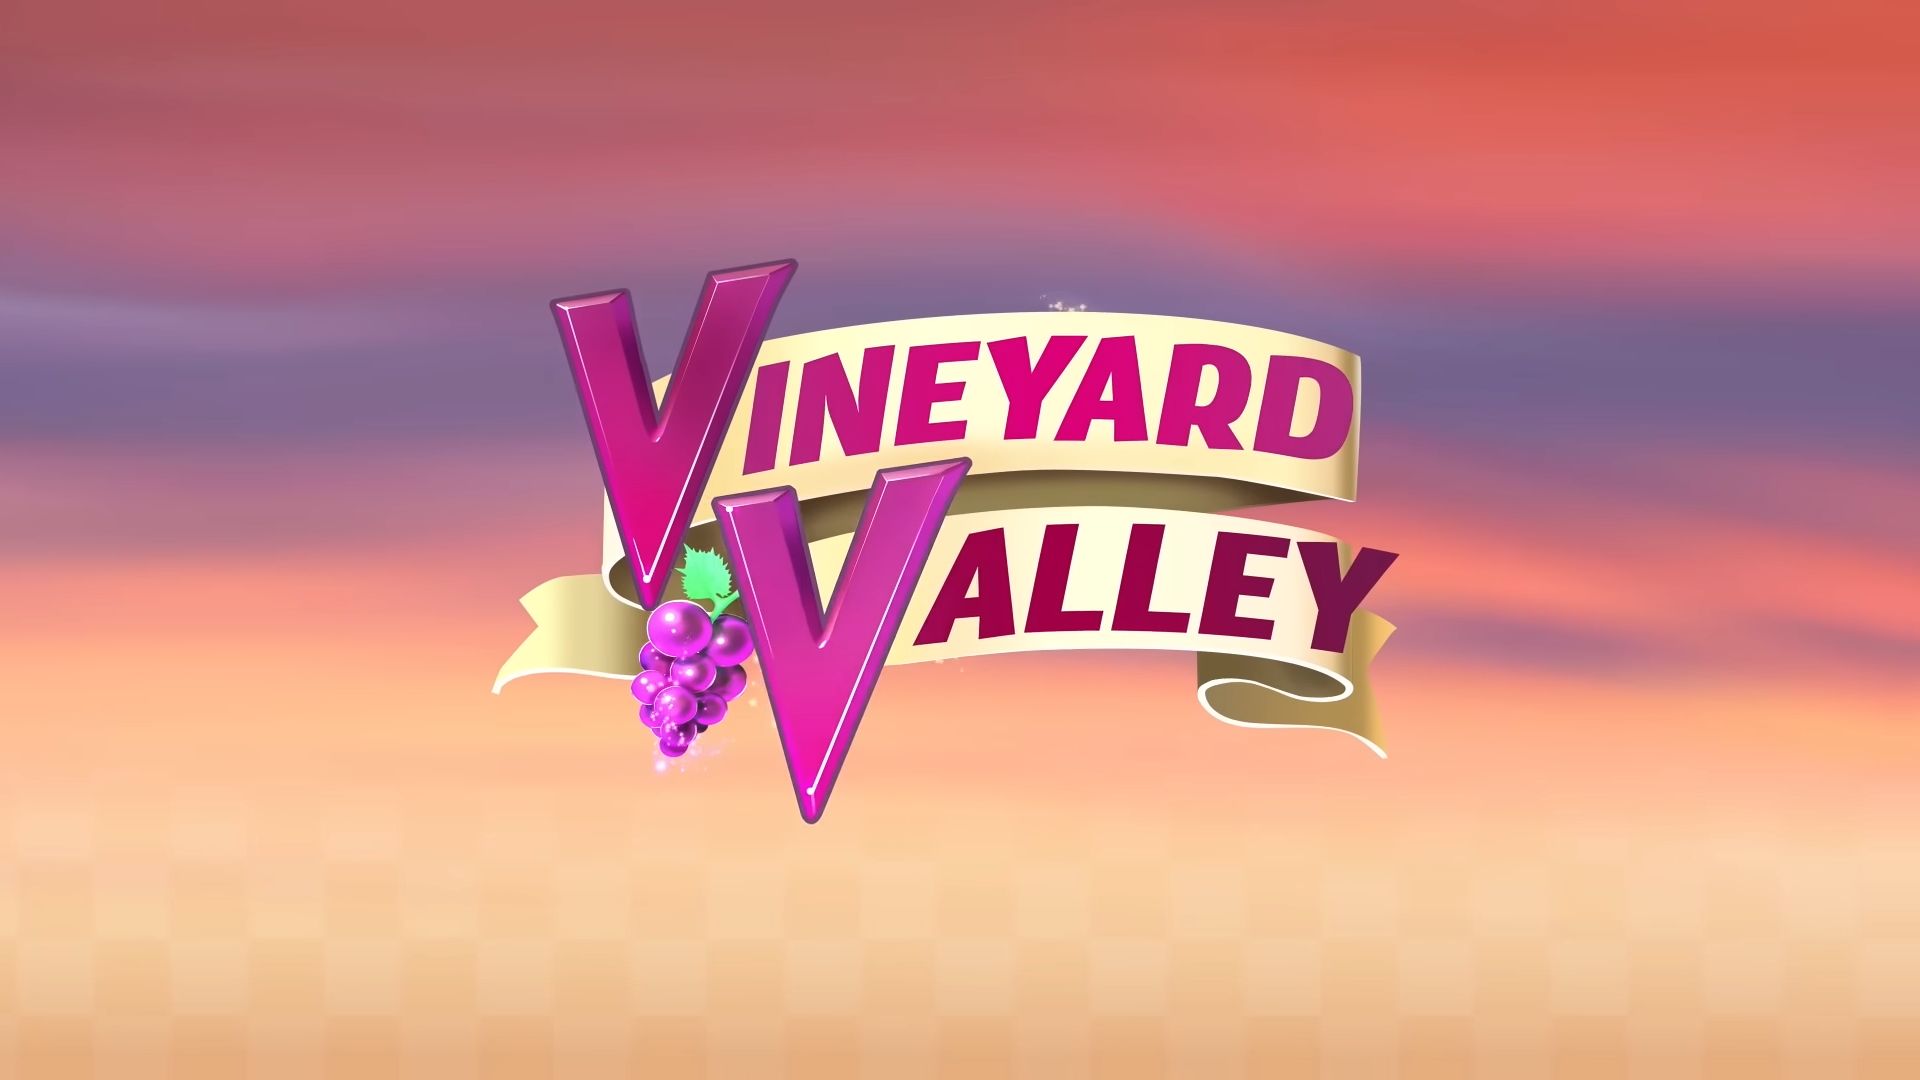 Vineyard Valley NETFLIX